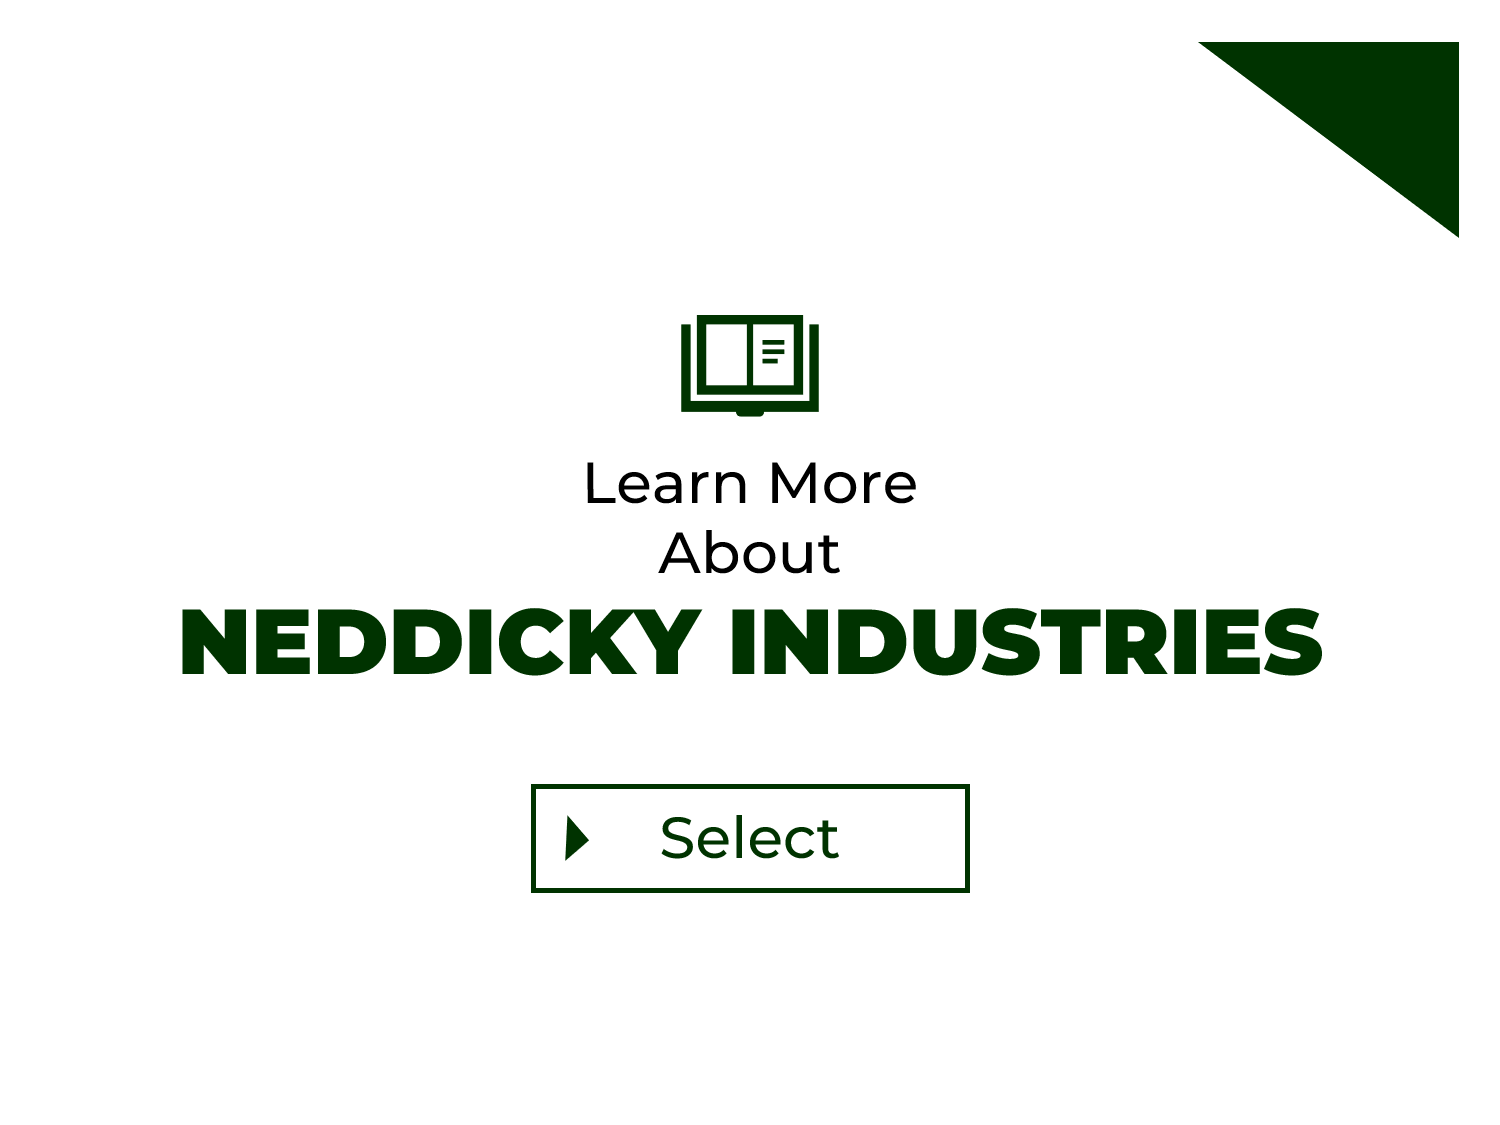 About Neddicky Industries